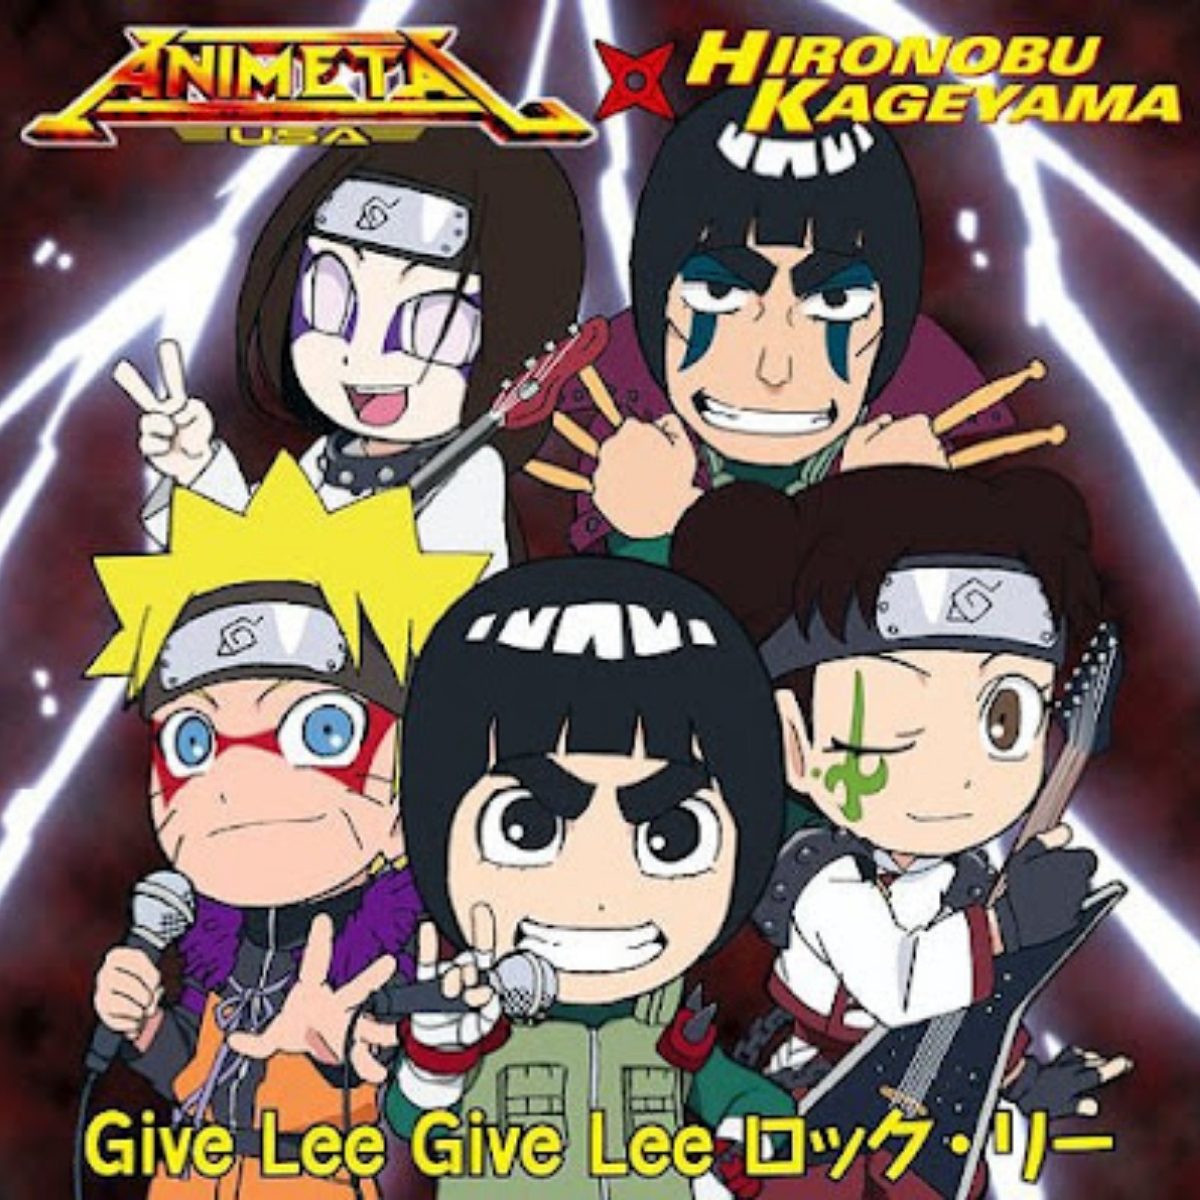 ANIMETAL USA x Hironobu Kageyama - Give Lee Give Lee Rock Lee